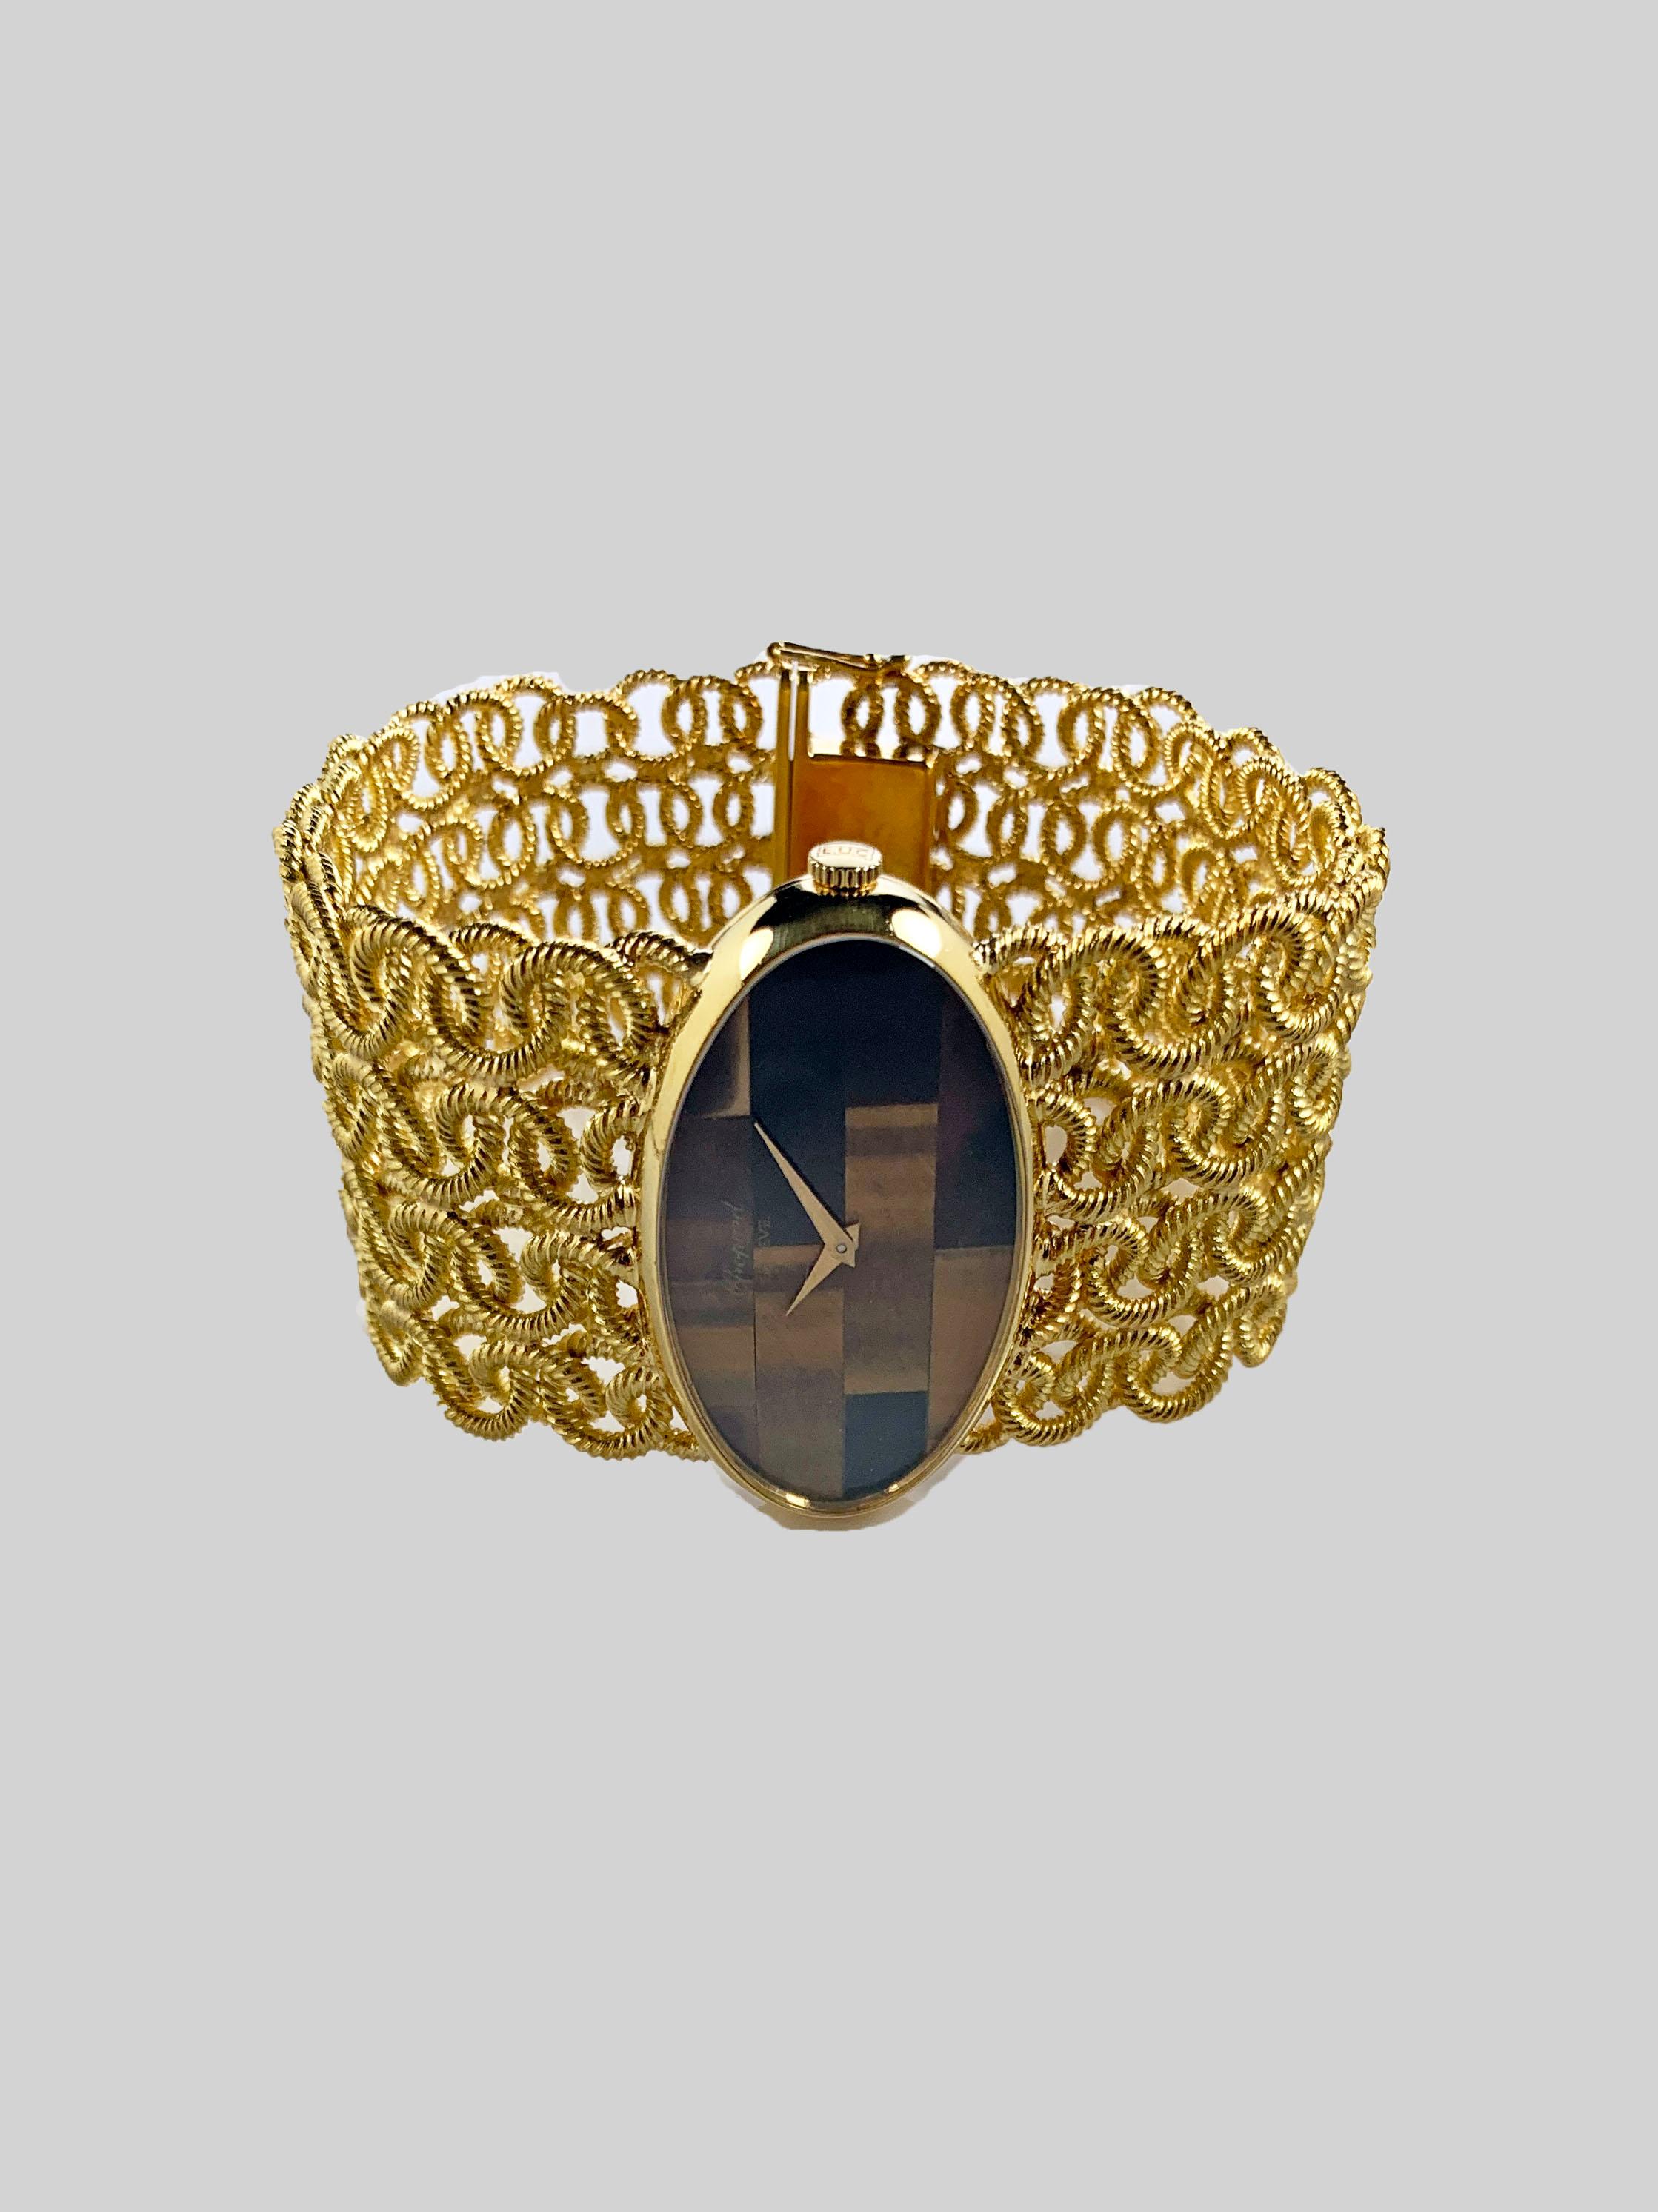 Chopard 18 Karat Yellow Gold Tiger's Eye Bracelet Watch, 1970s For Sale 2